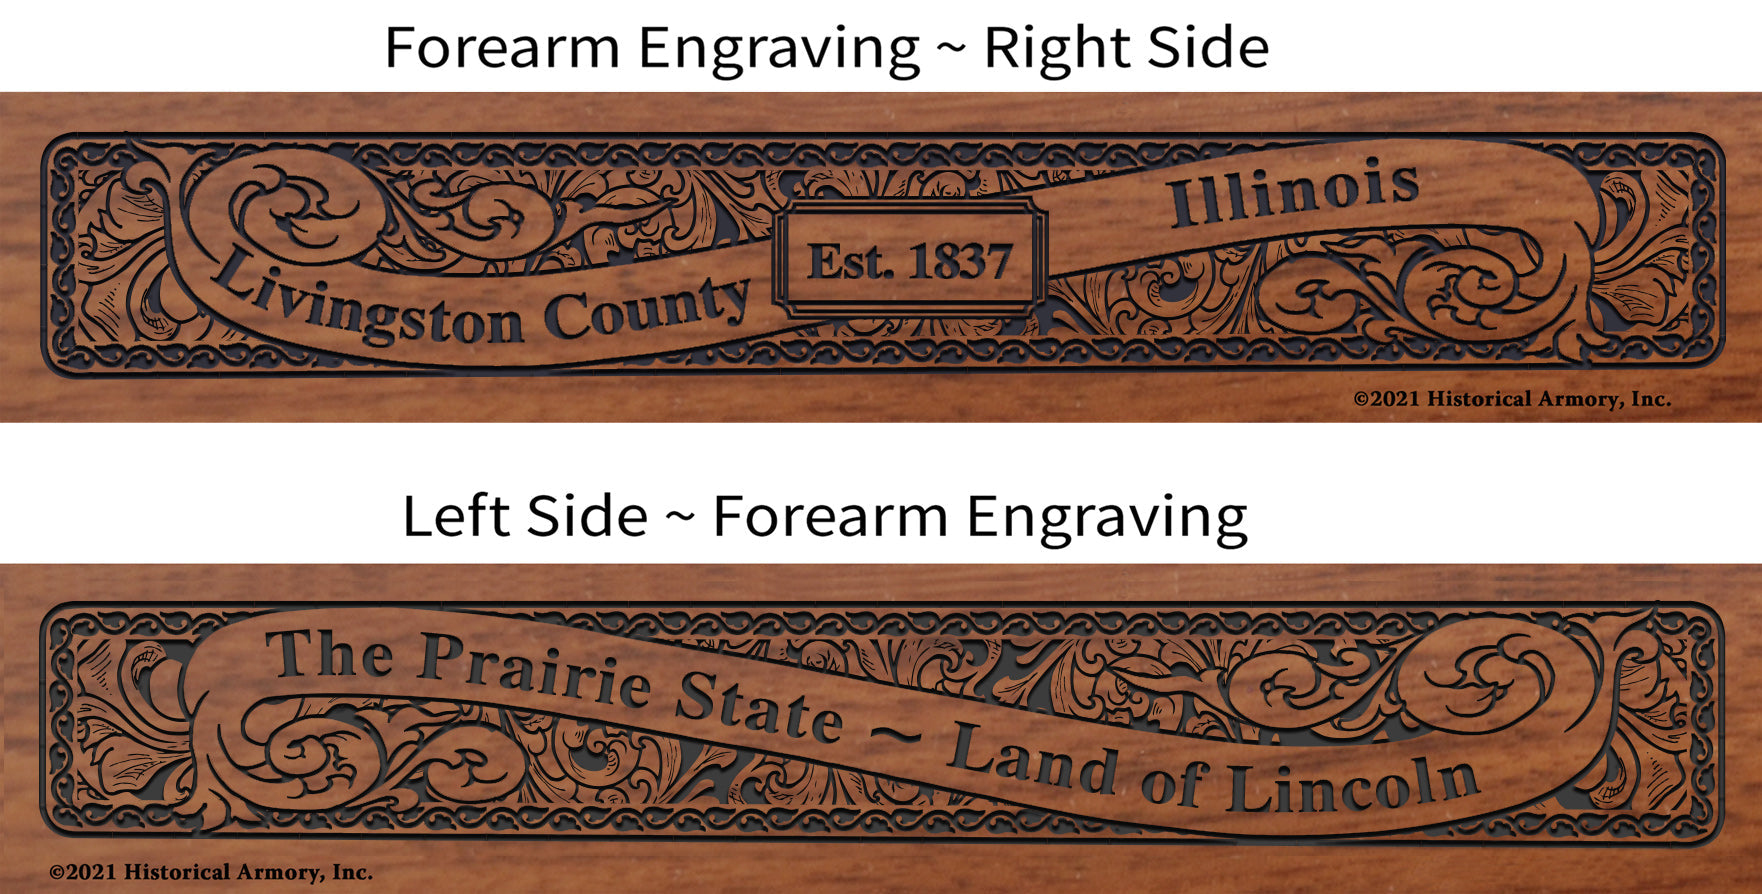 Livingston County Illinois Establishment and Motto History Engraved Rifle Forearm